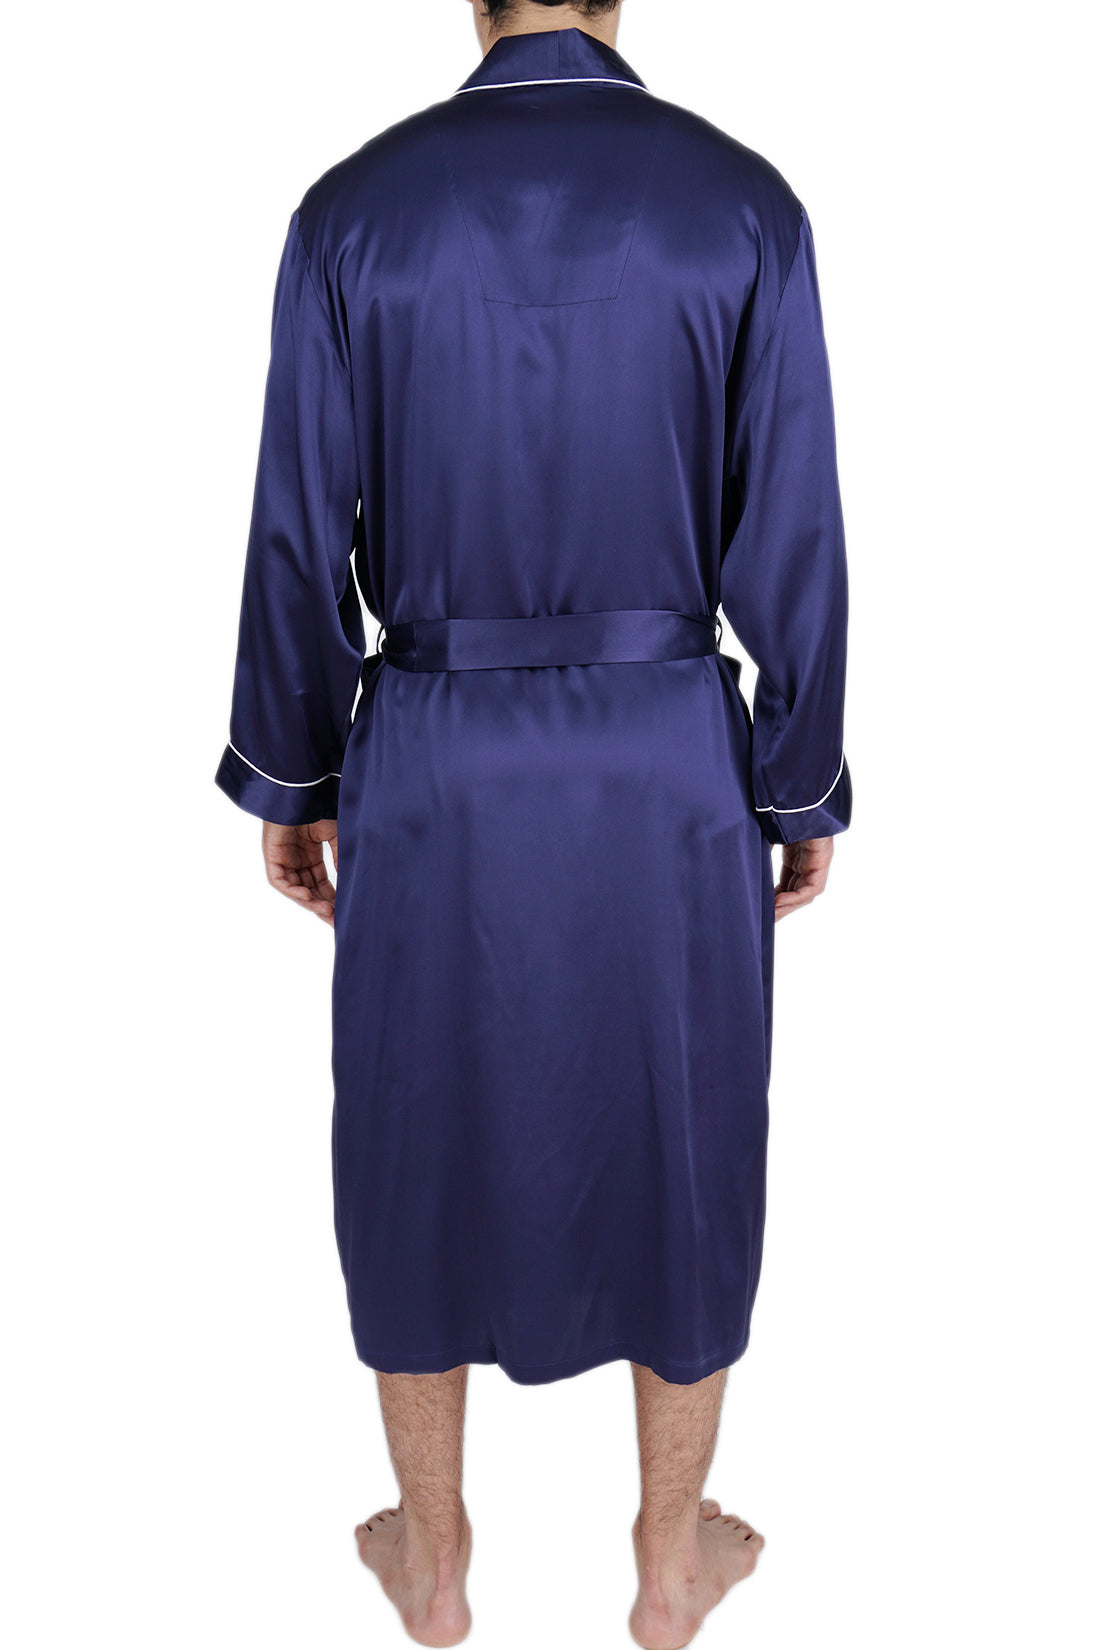 OSCAR ROSSA Women's Silk Sleepwear 100% Silk Charmeuse Long Robe Kimono -  Plum Blossom Black / M/L